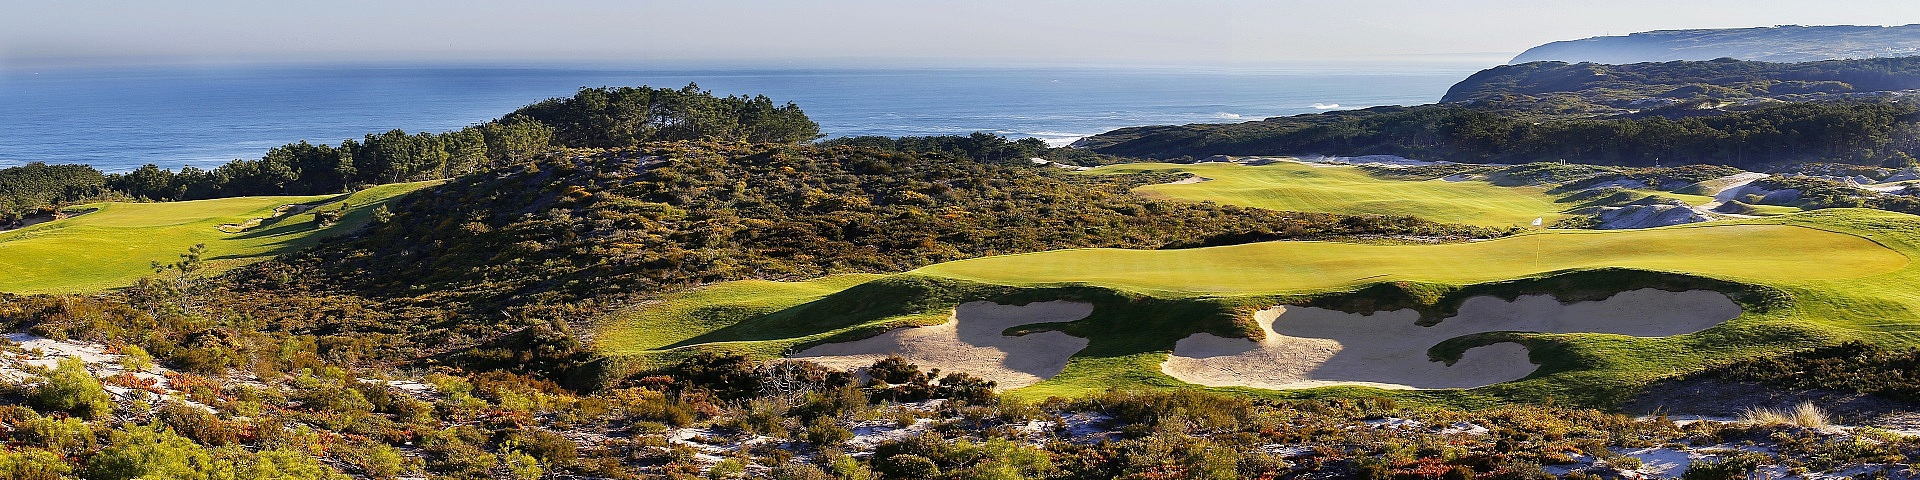 West Cliffs Golf Course